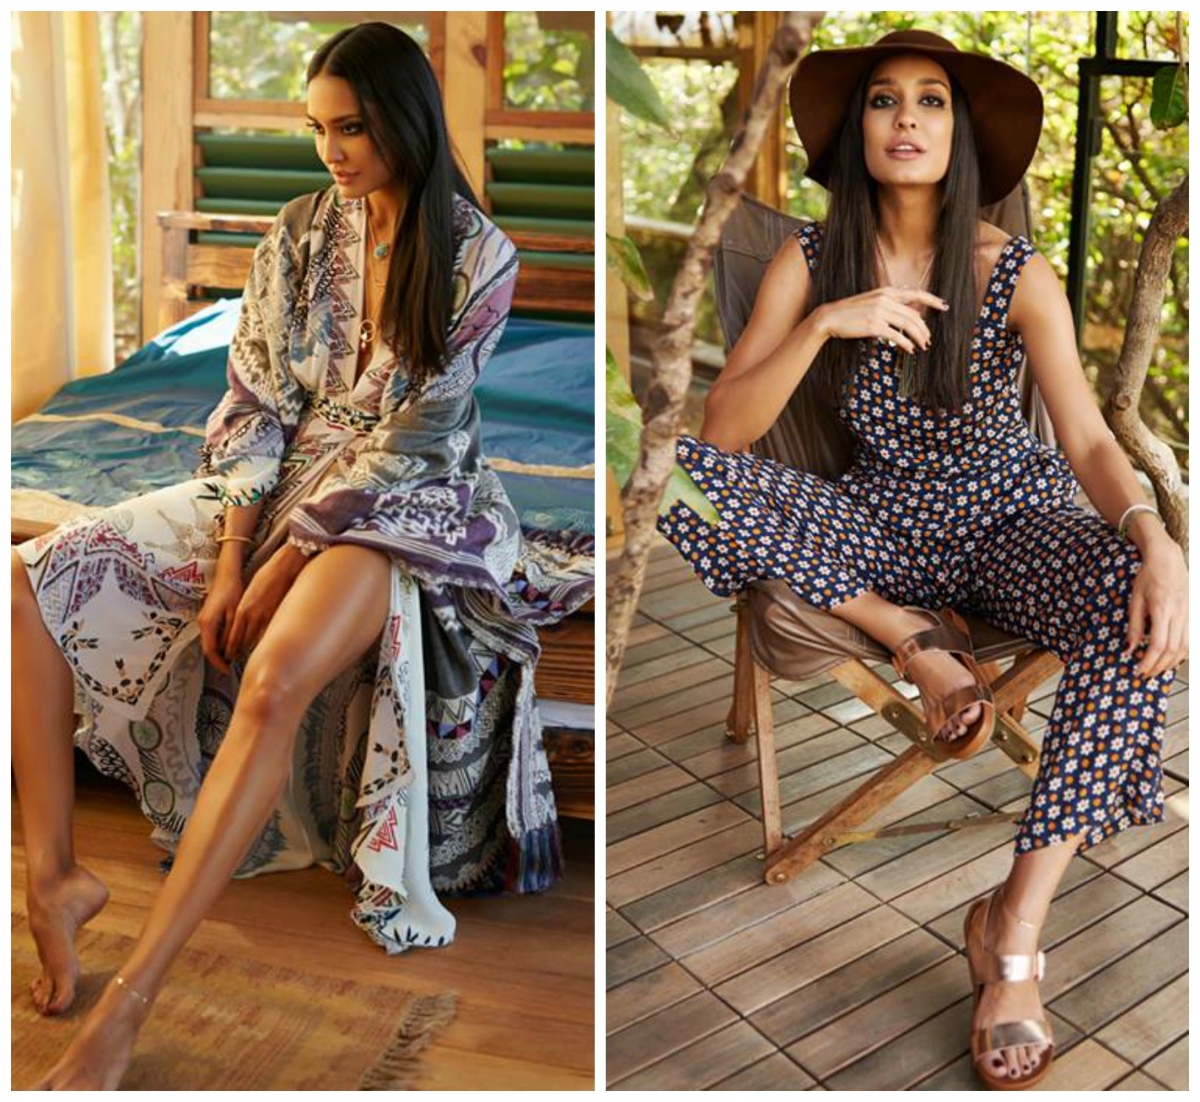 Priyanka Chopra Covers Cosmopolitan; Lisa Haydon Sizzles on Elle India